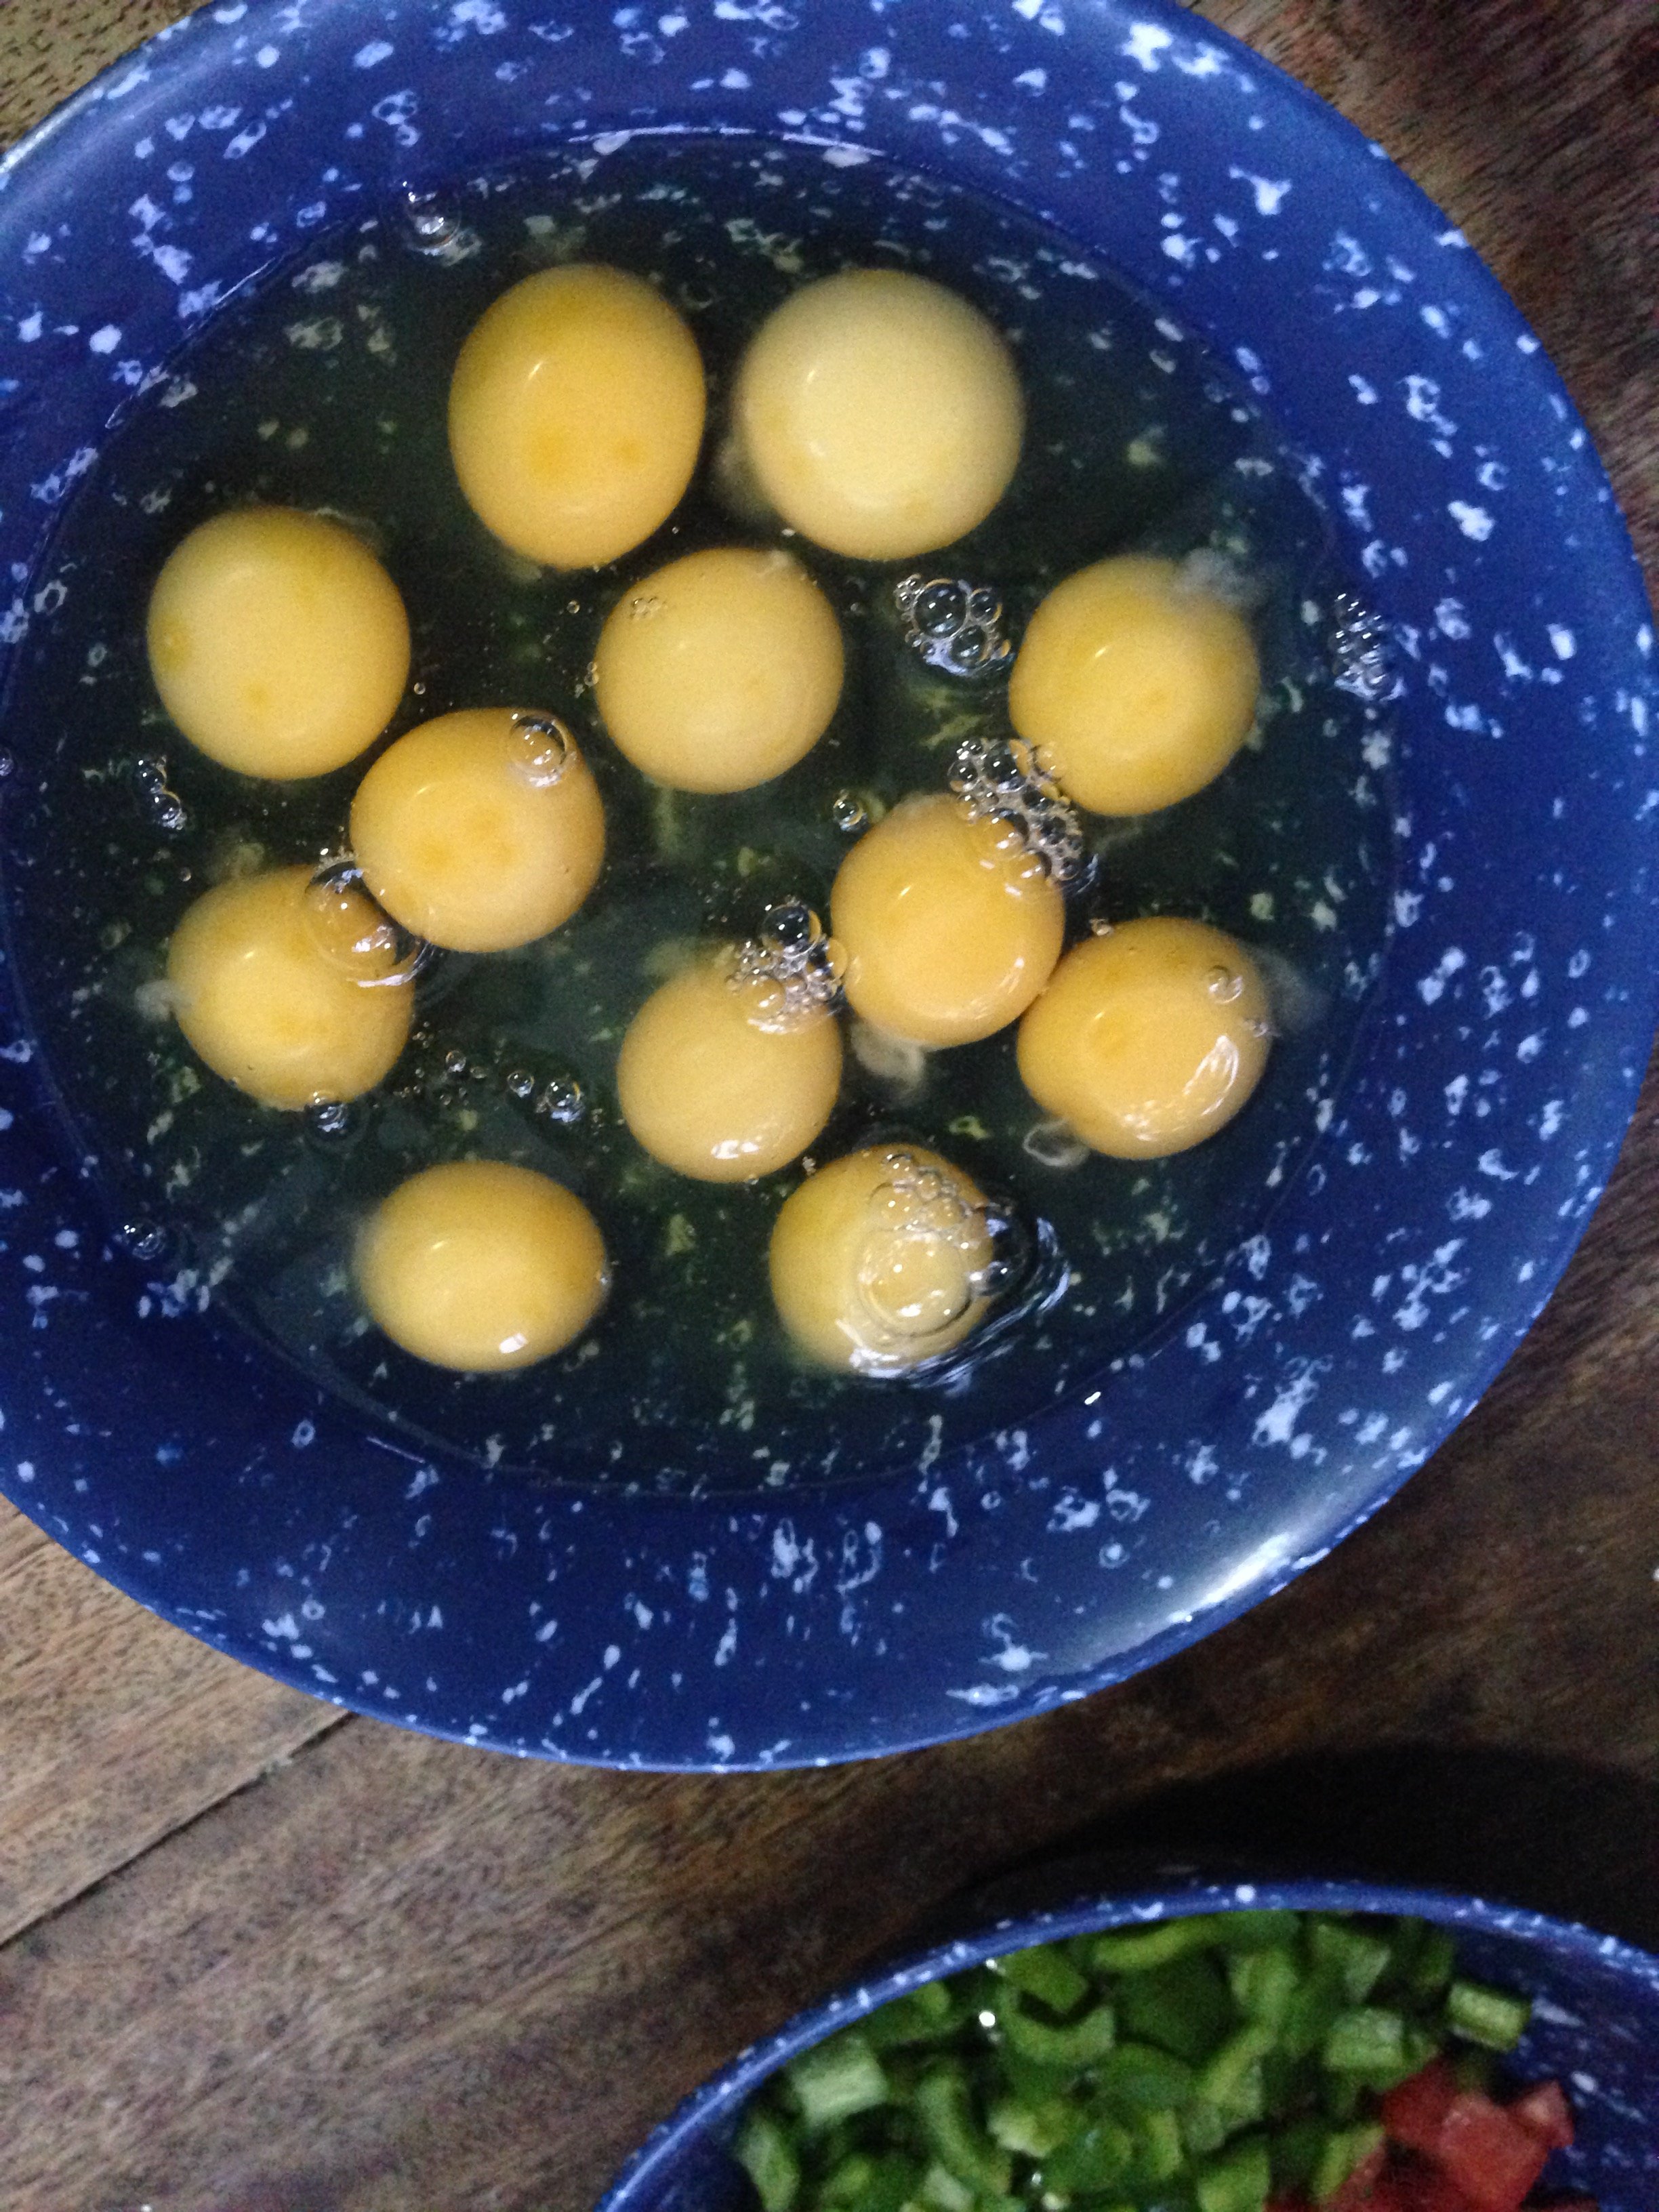 A dozen unbroken egg yolks for your viewing pleasure